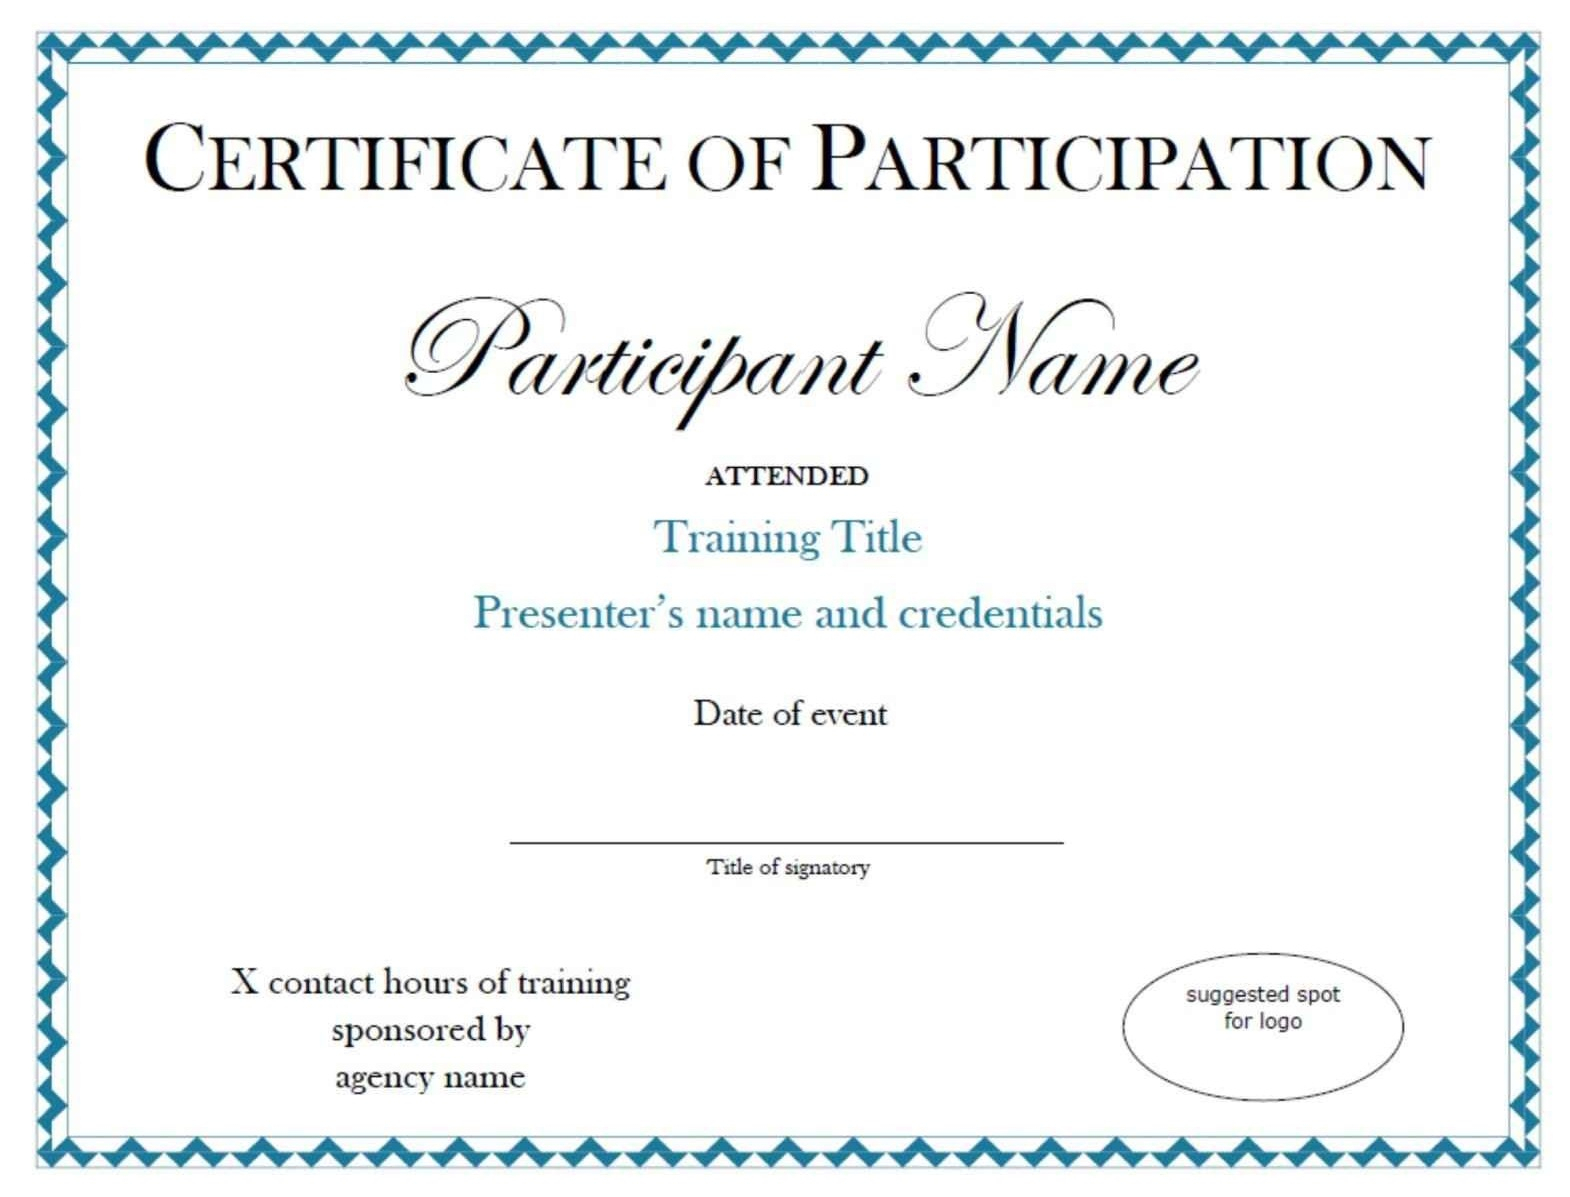 Certificates. Best Certificate Of Participation Template In Sample Certificate Of Participation Template